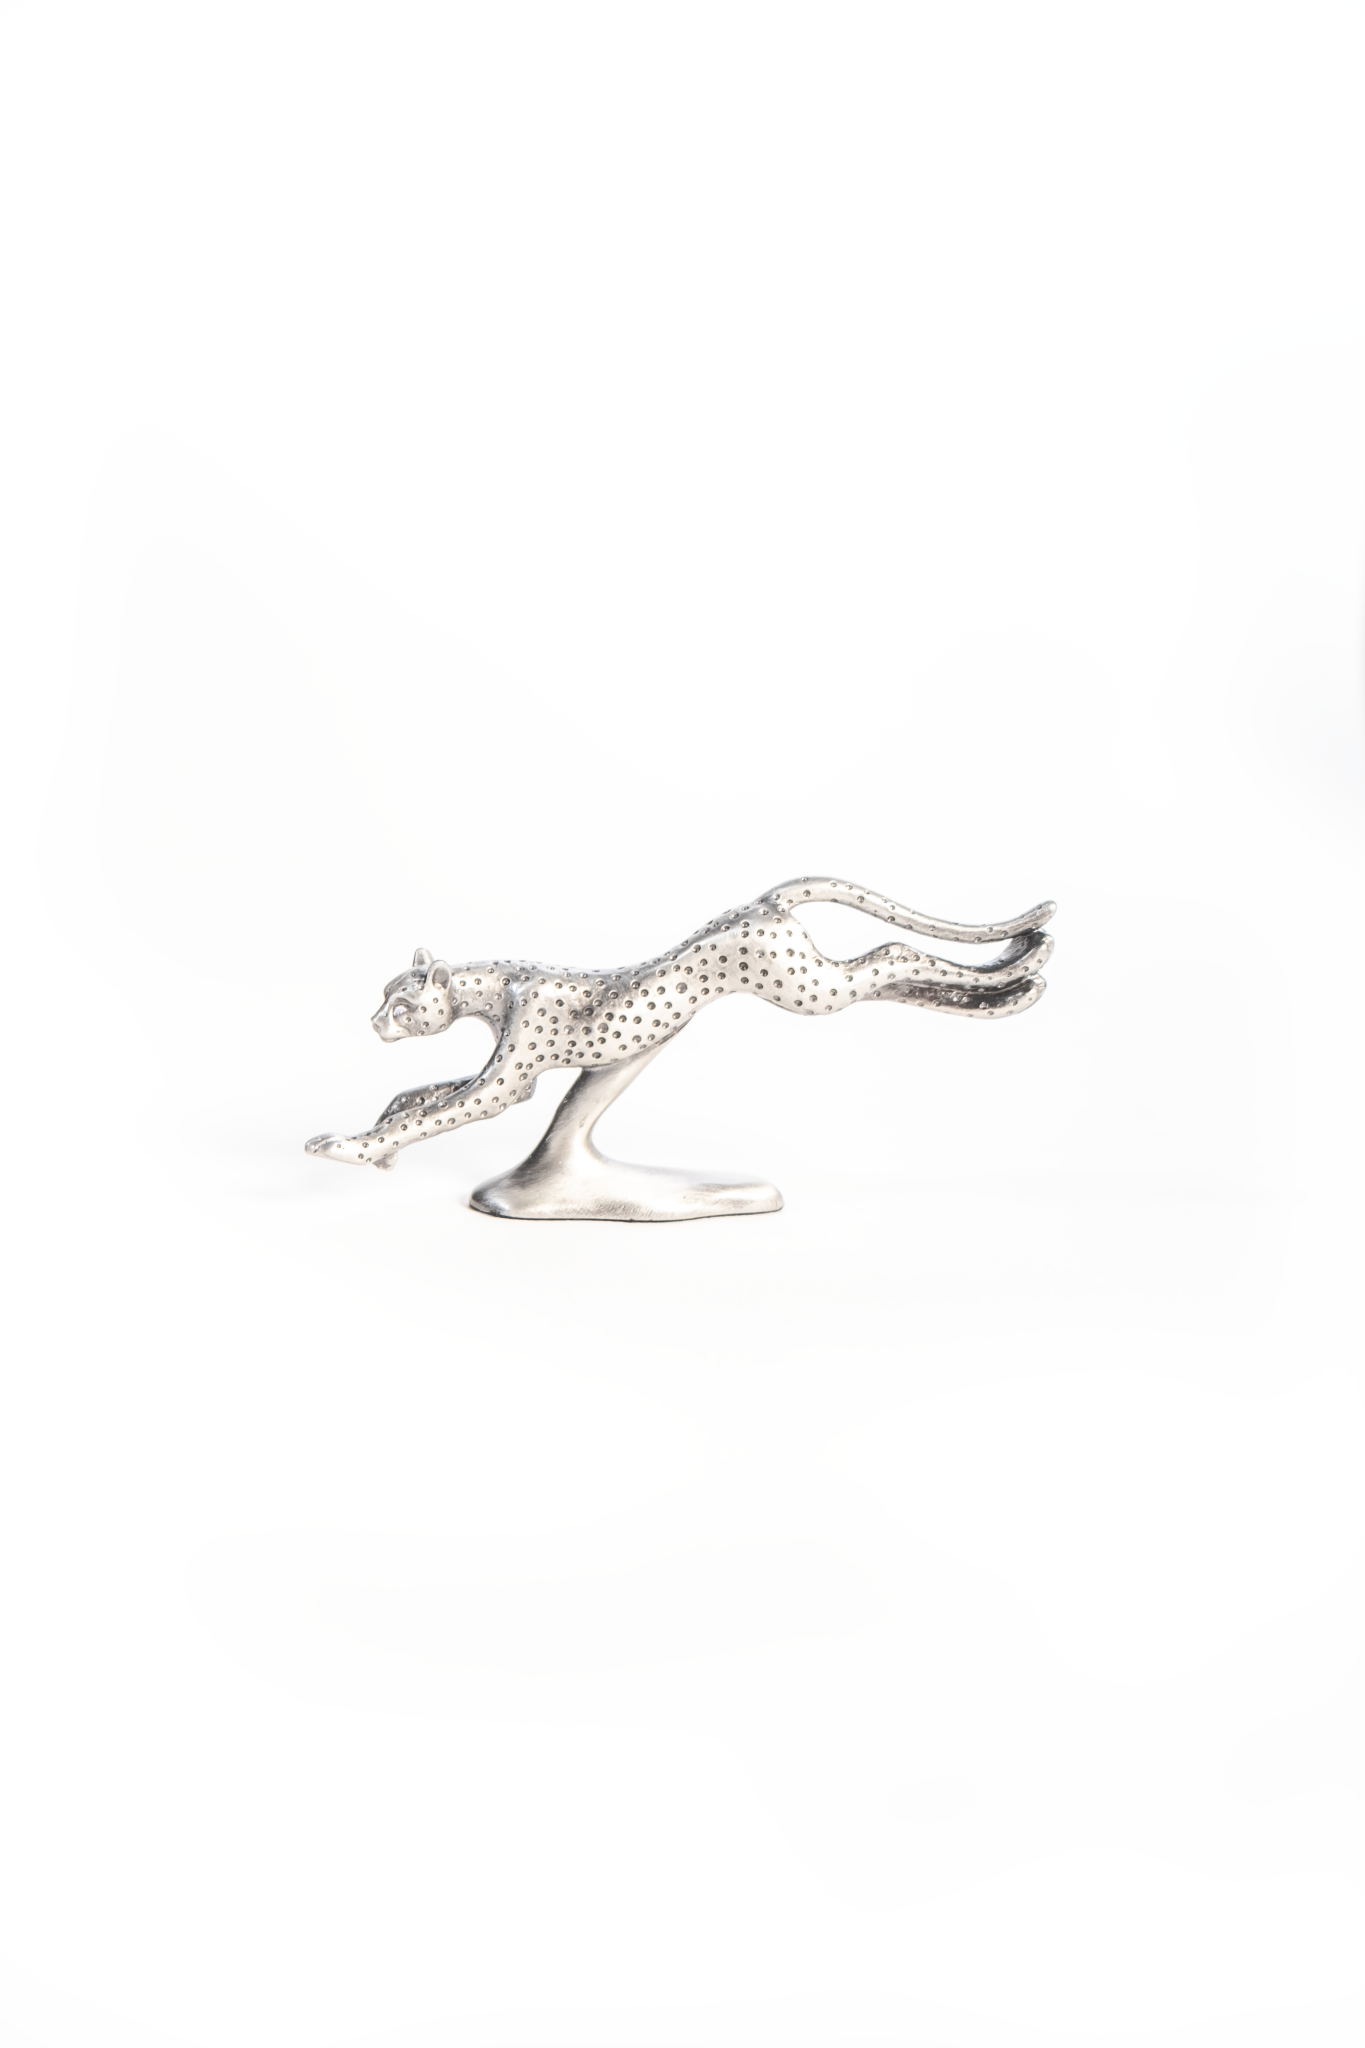 Cheetah Pewter Figurine